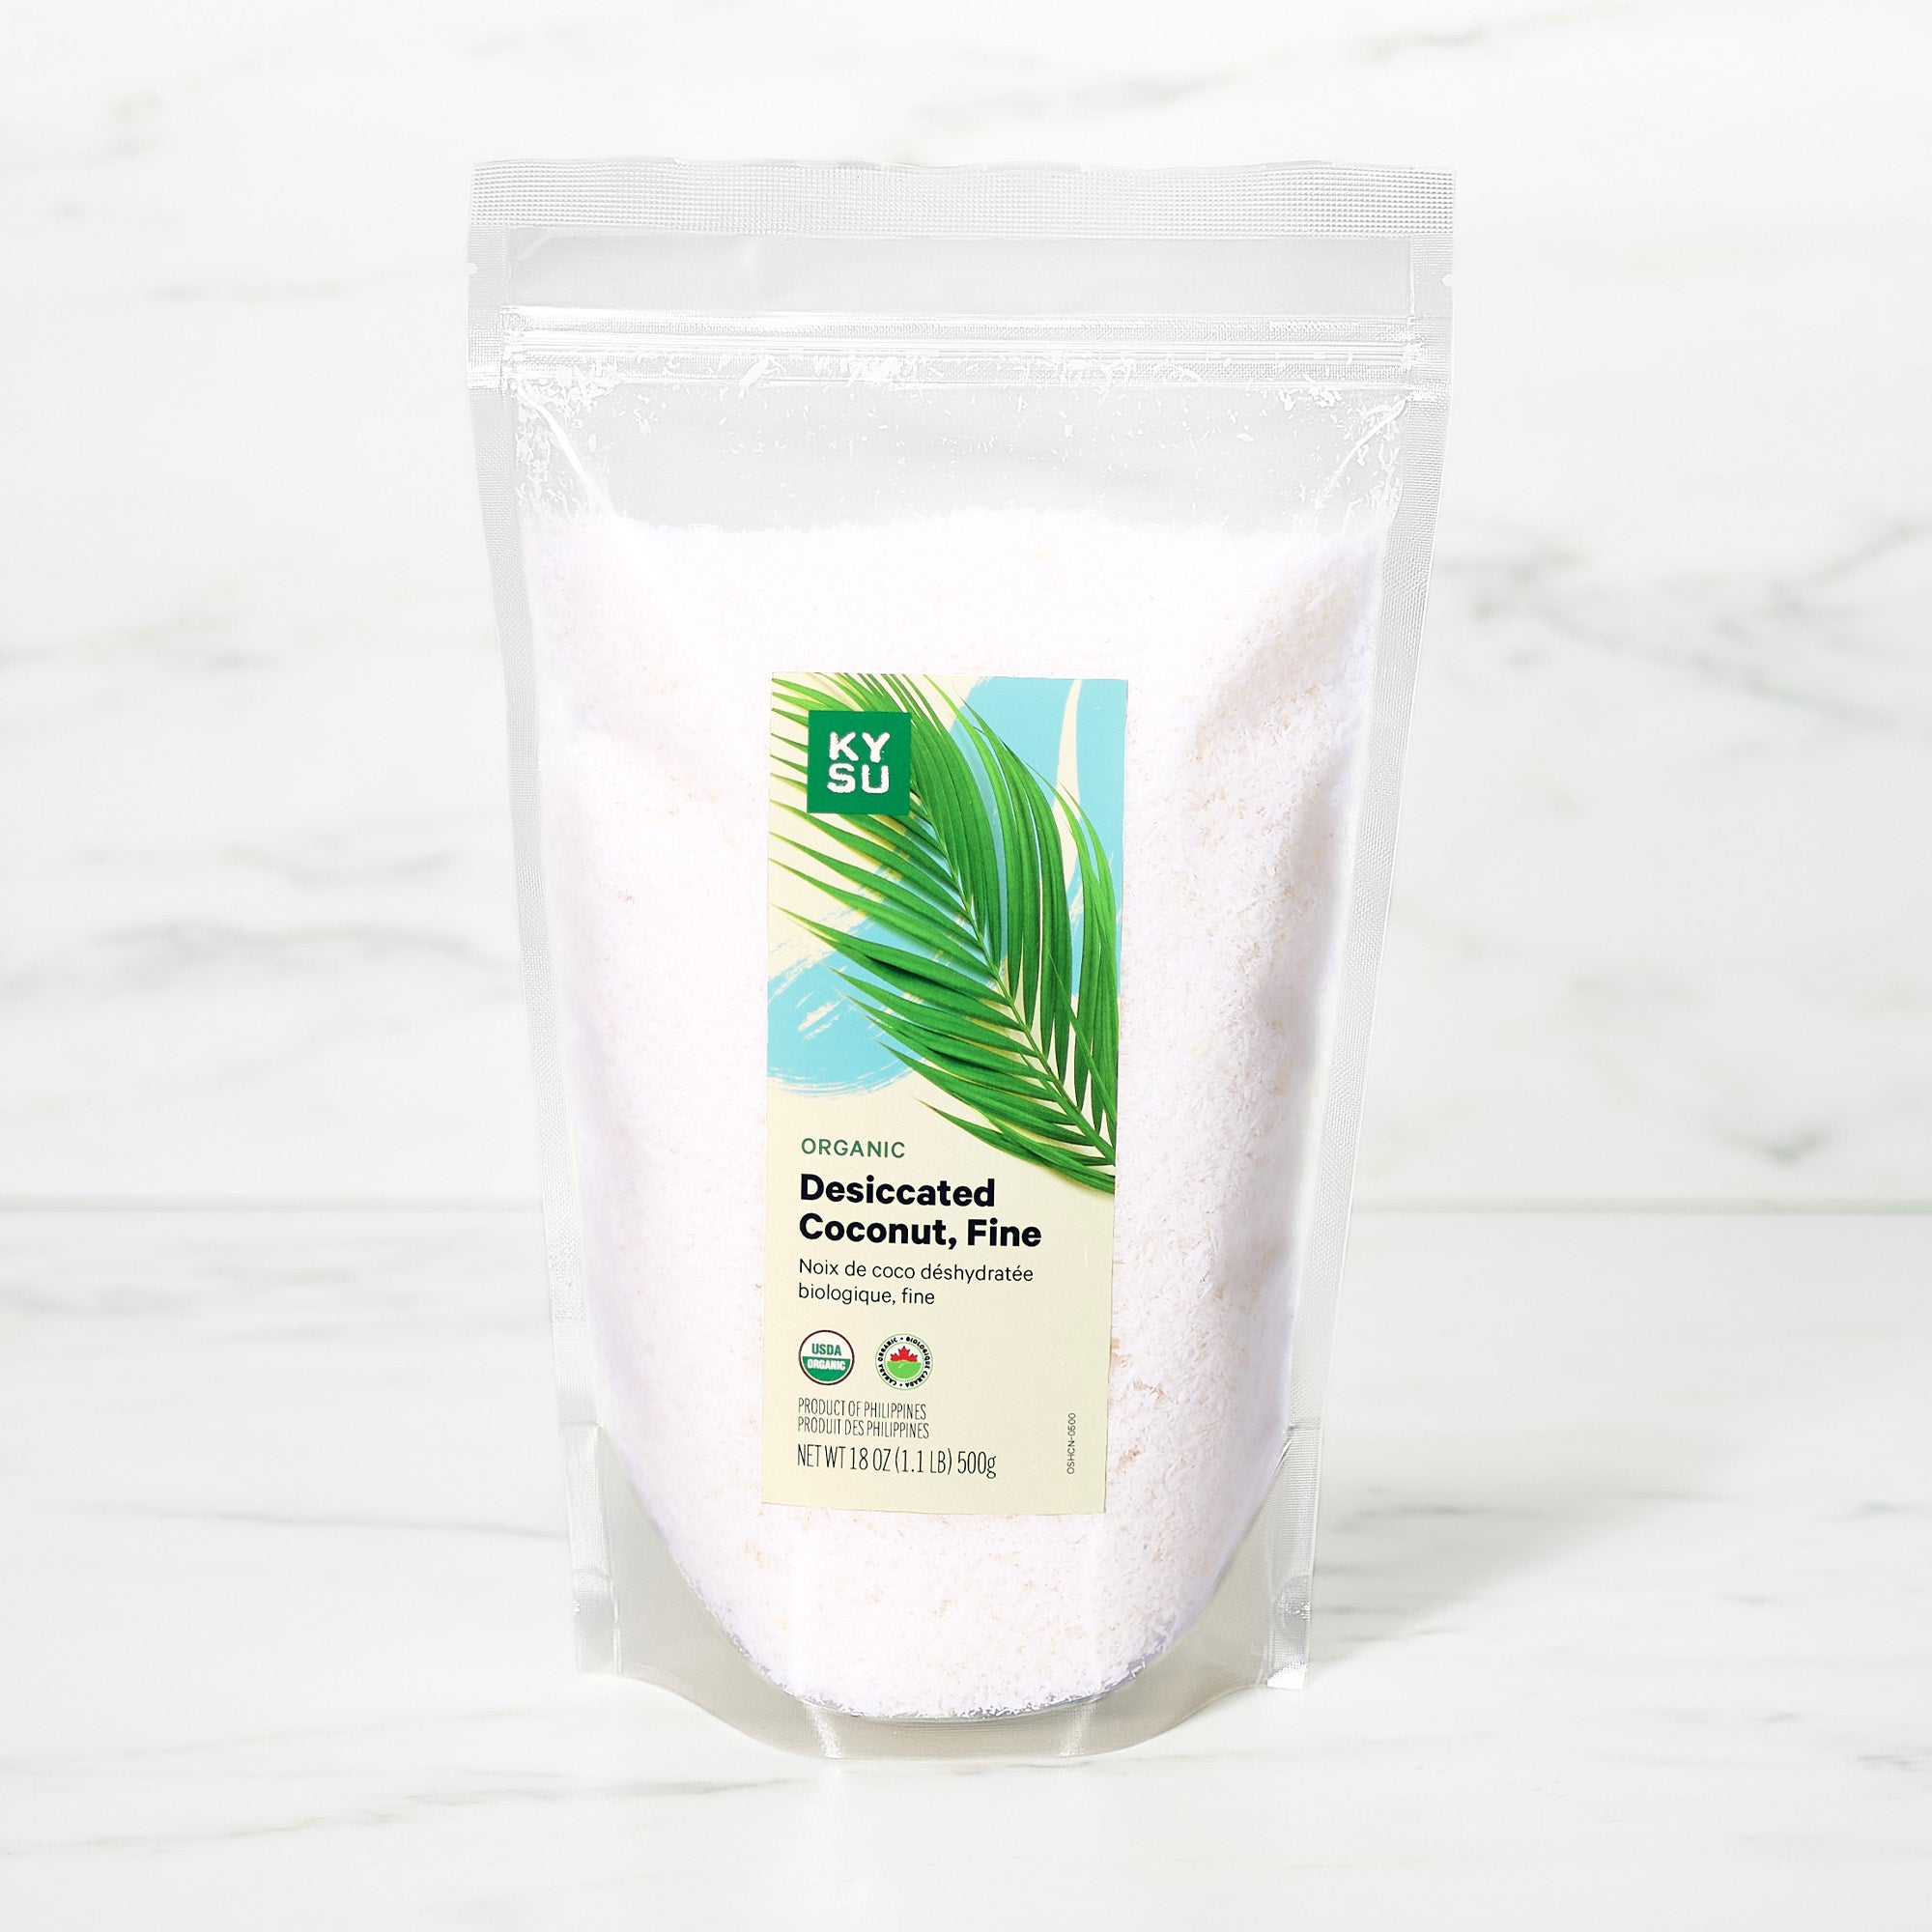 Organic Desiccated Coconut, Fine, 1.1 lb